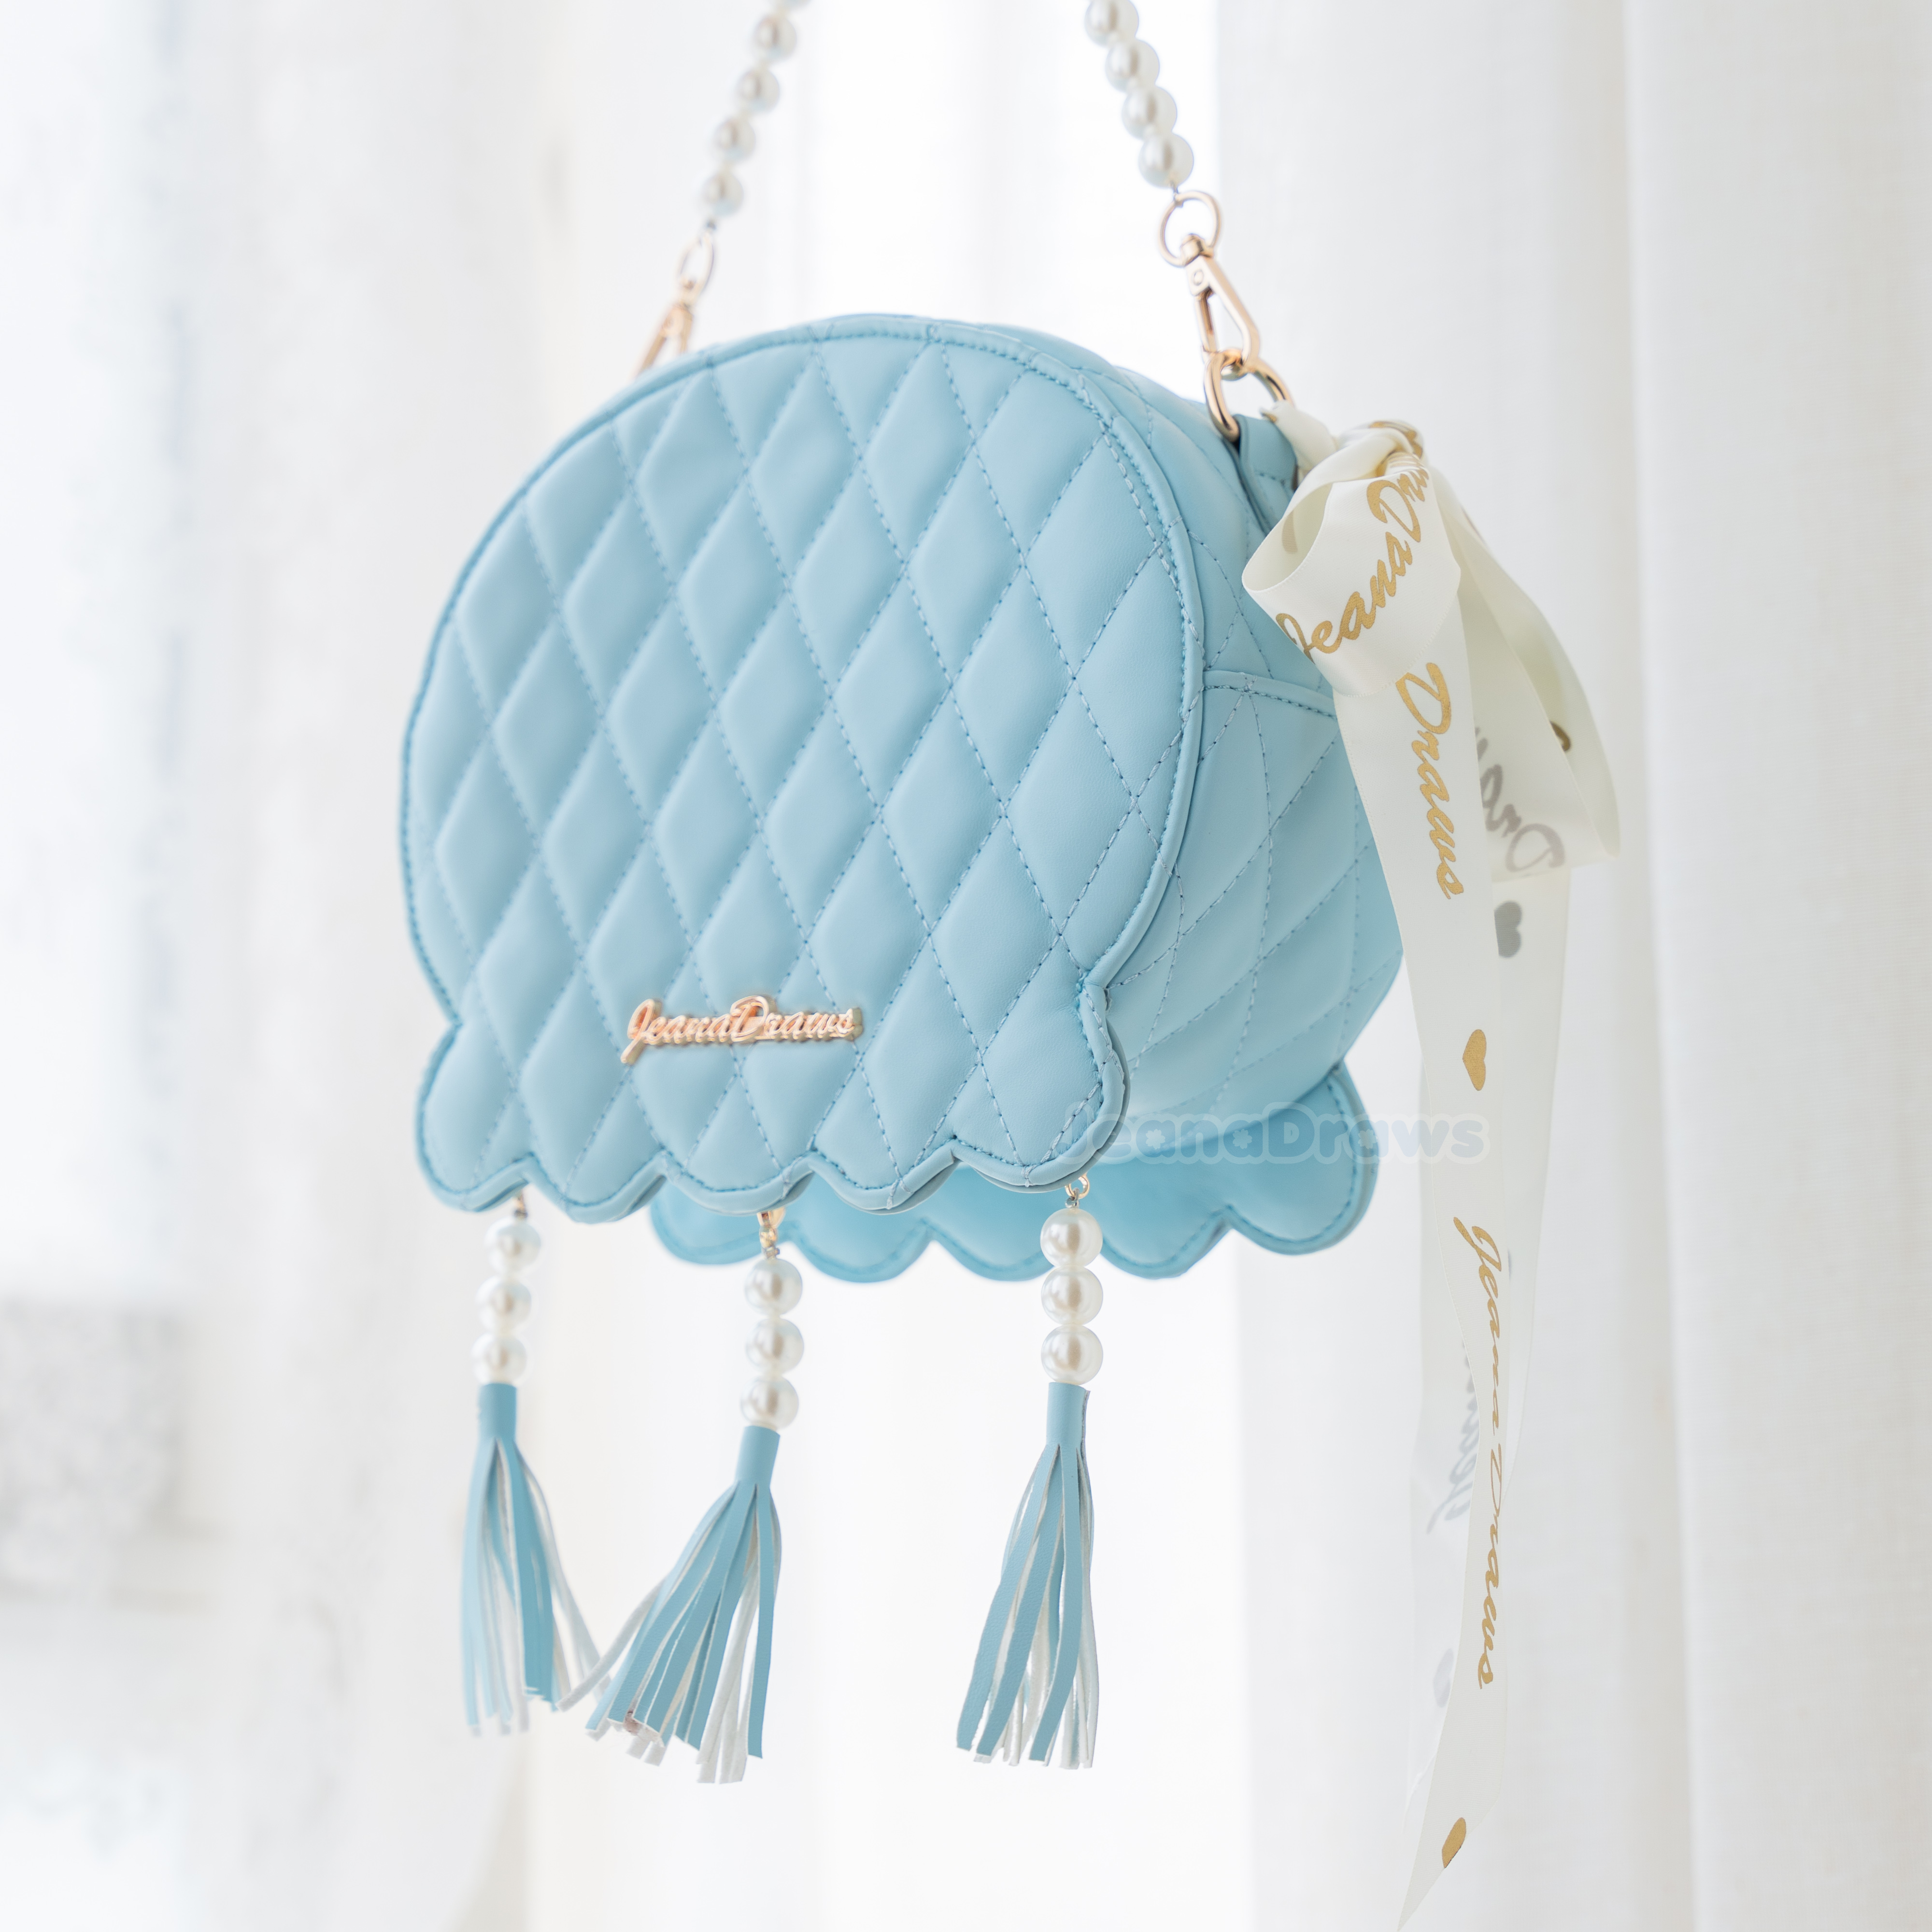 Jellyfish Quilted Handbag – JeanaDraws